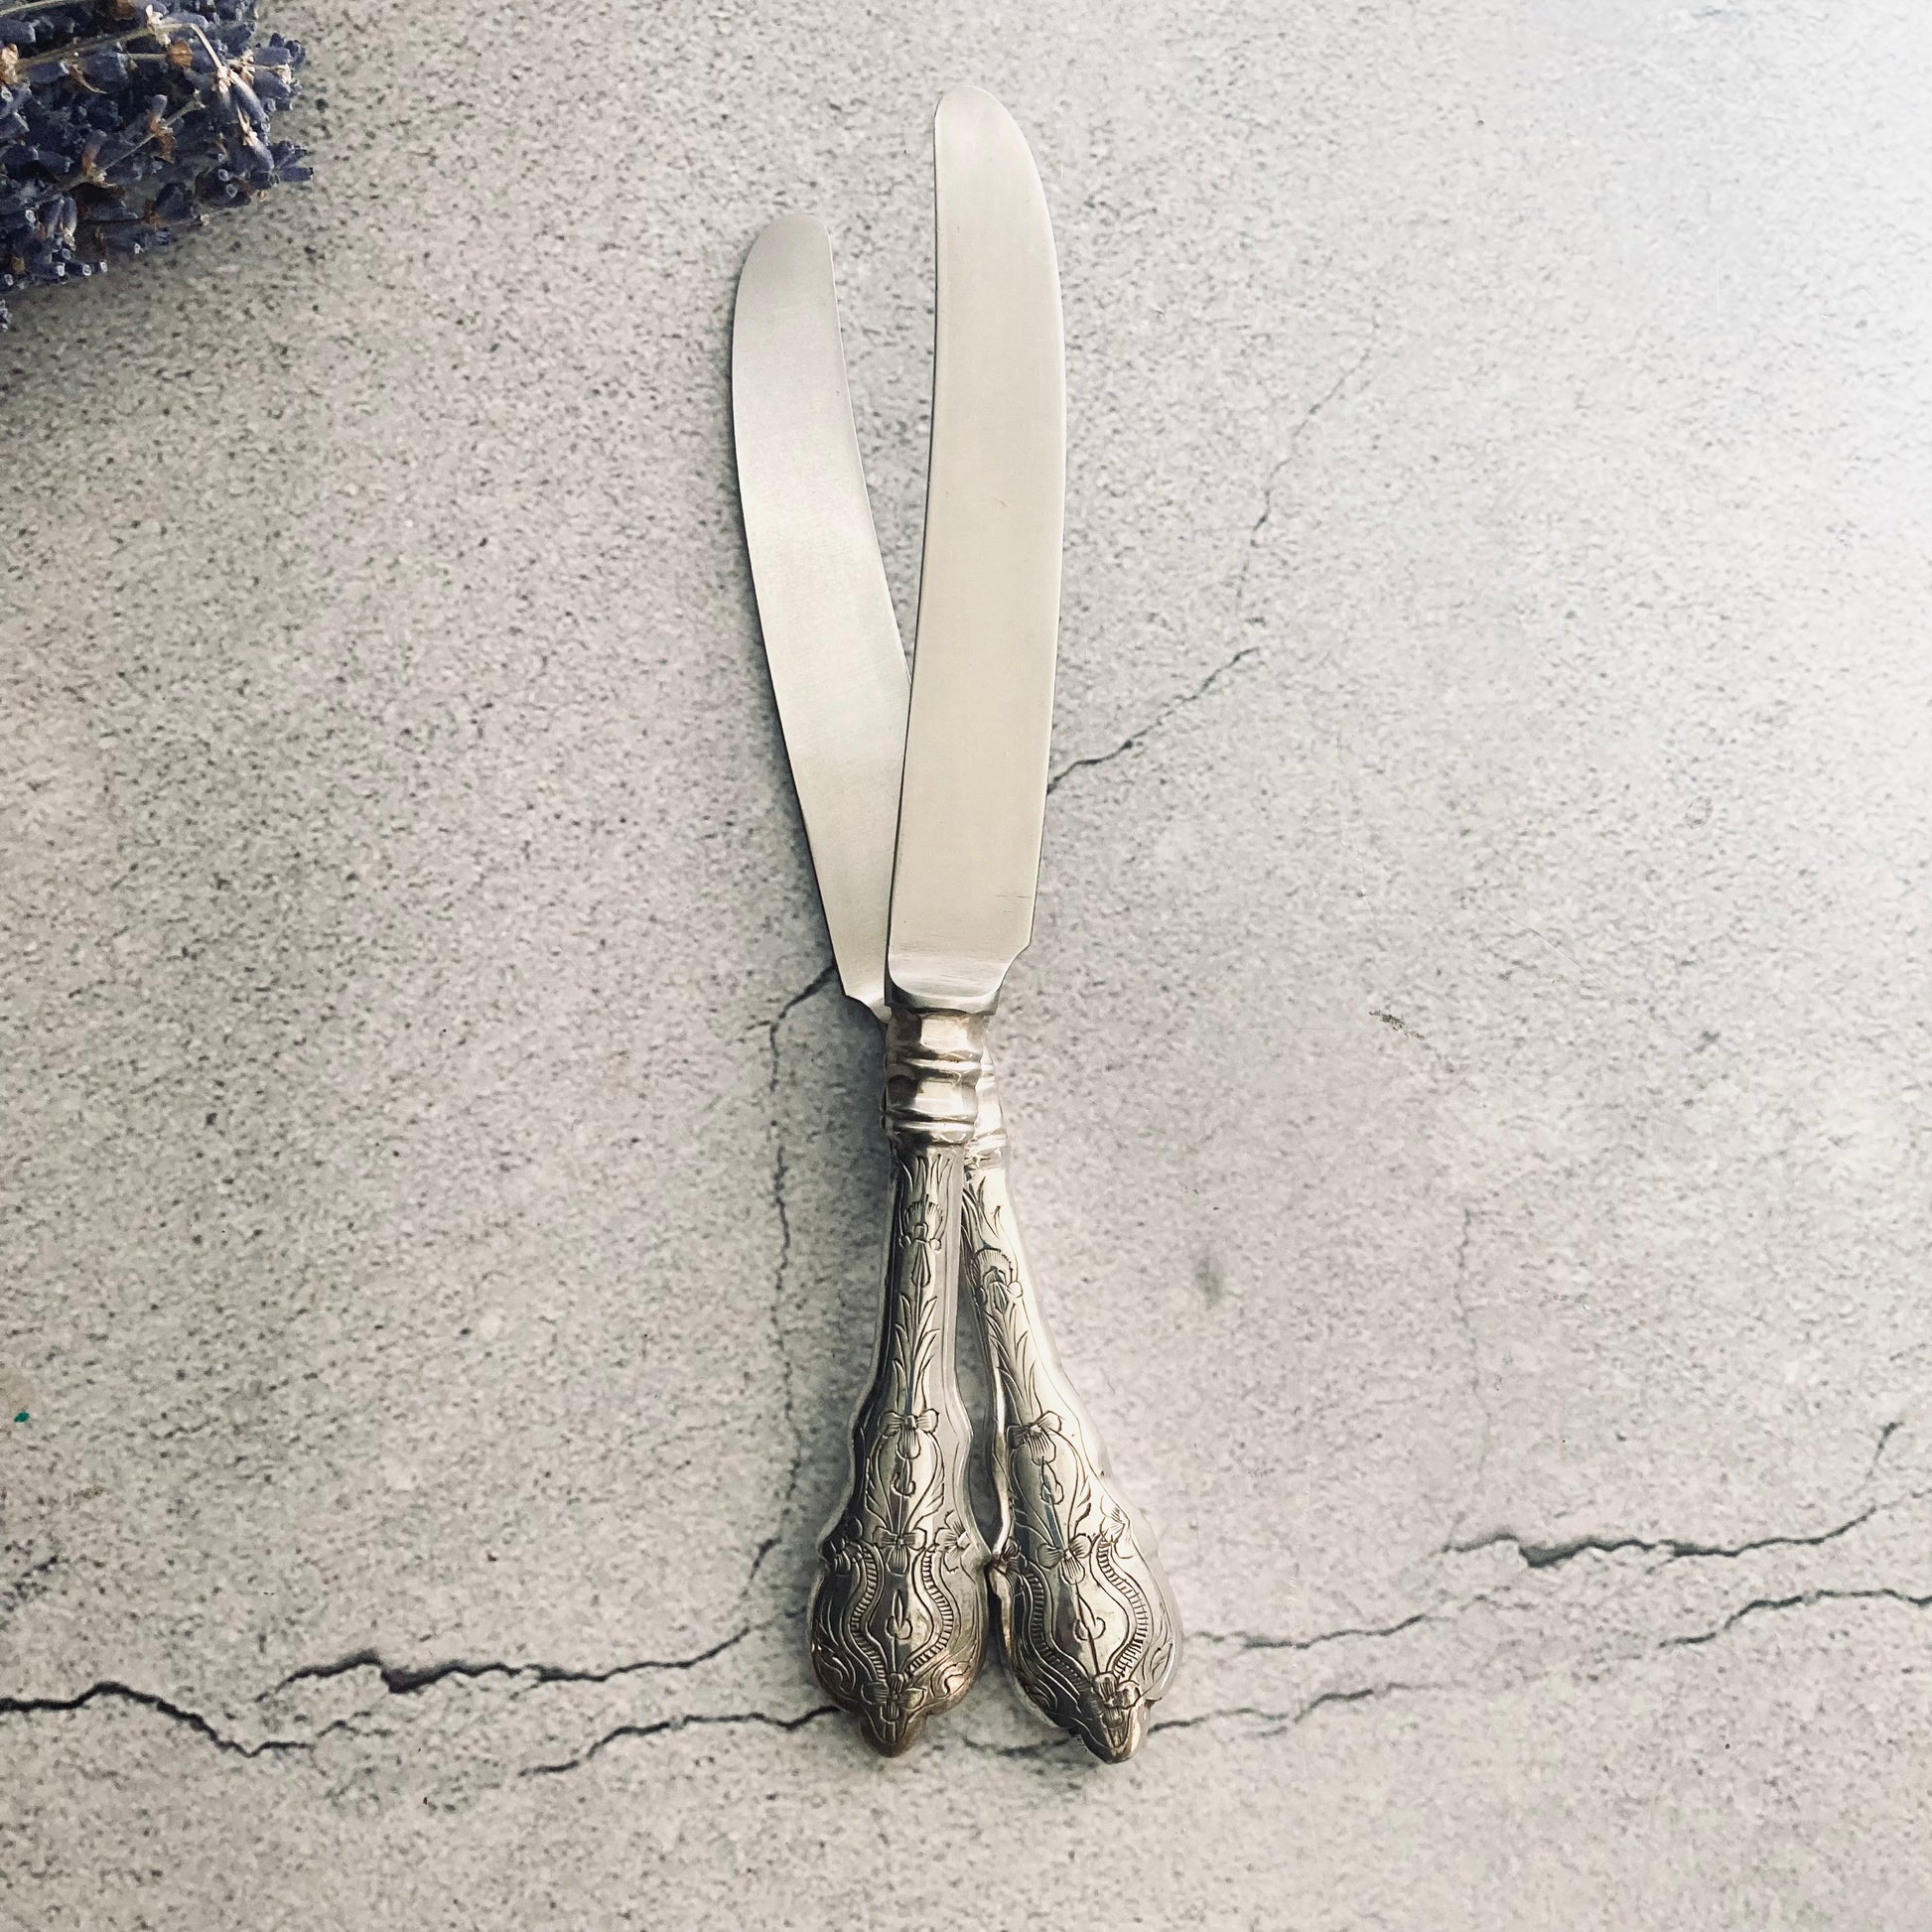  Vintage Silver Plate Floral Handle Knives